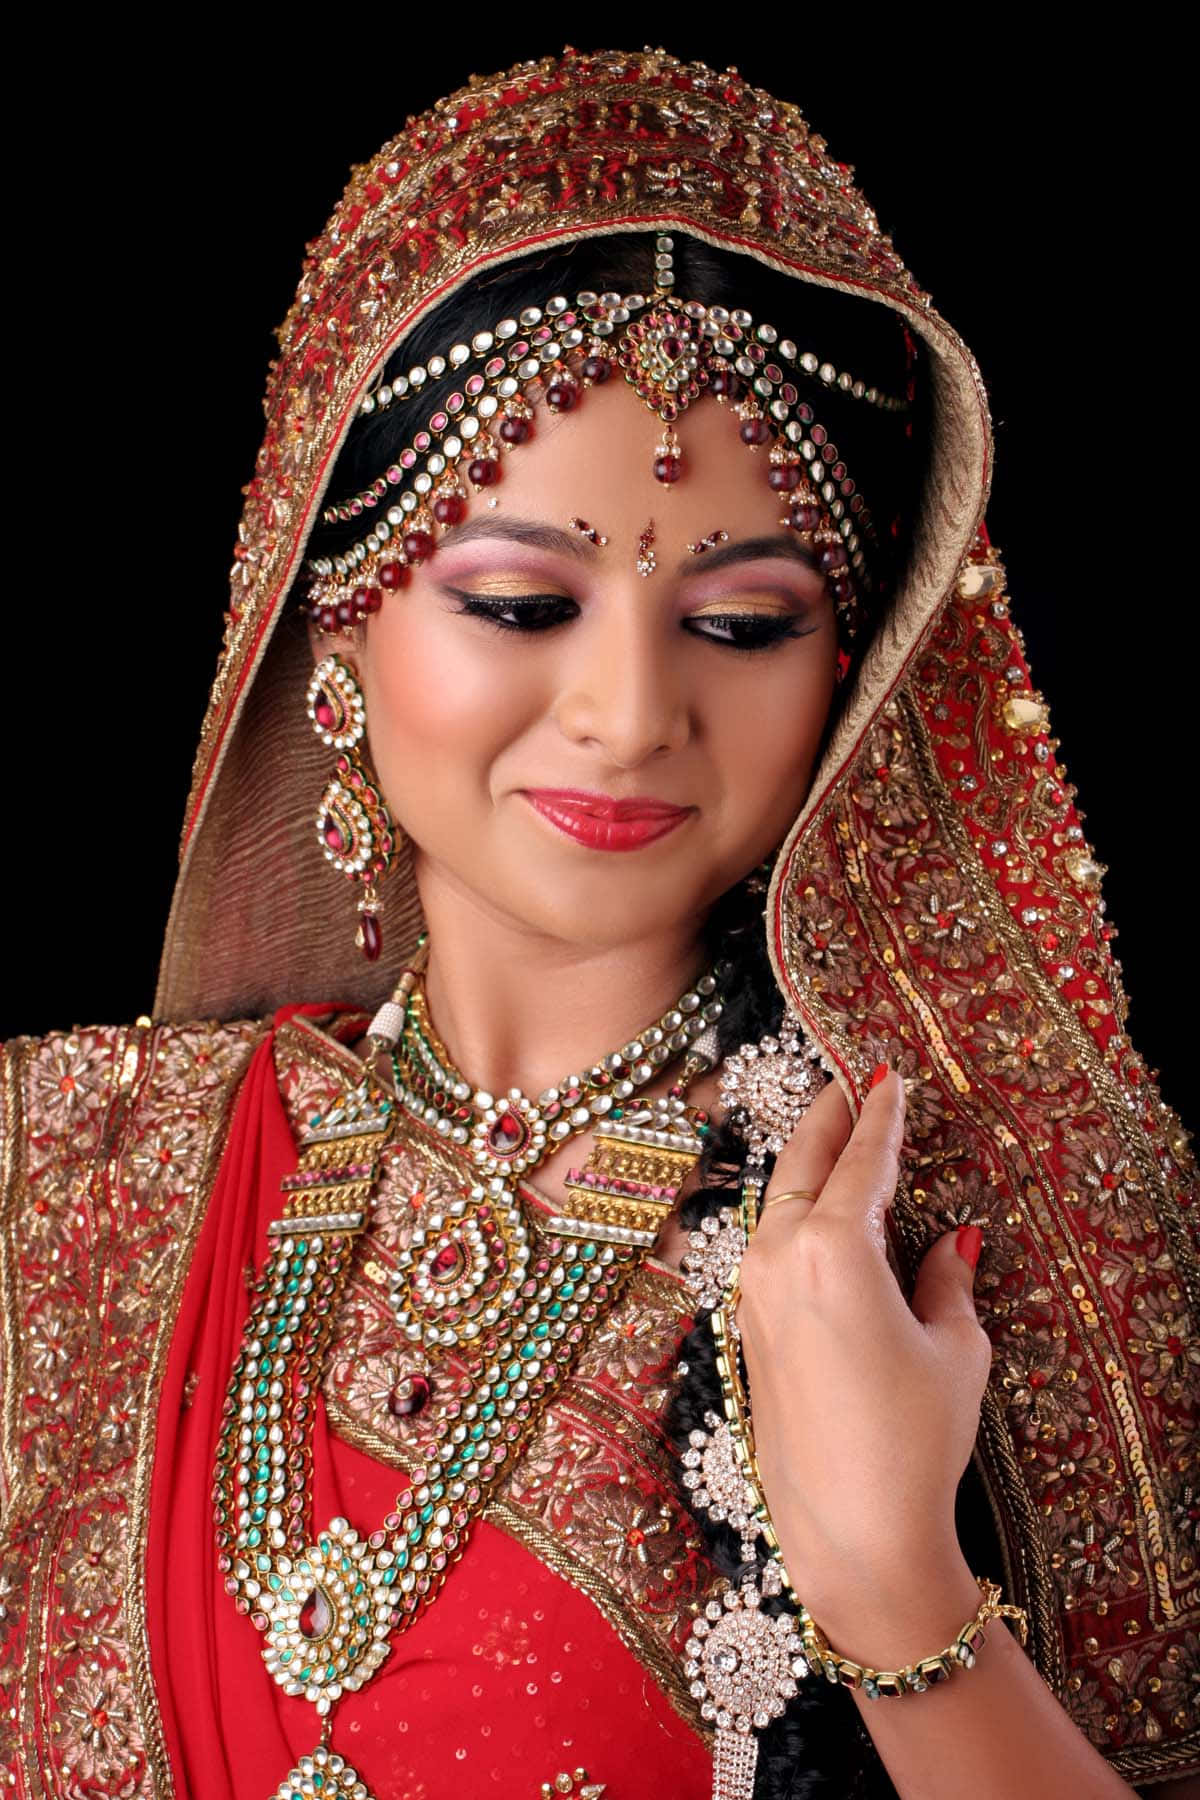 A Beautiful Woman In A Red Sari